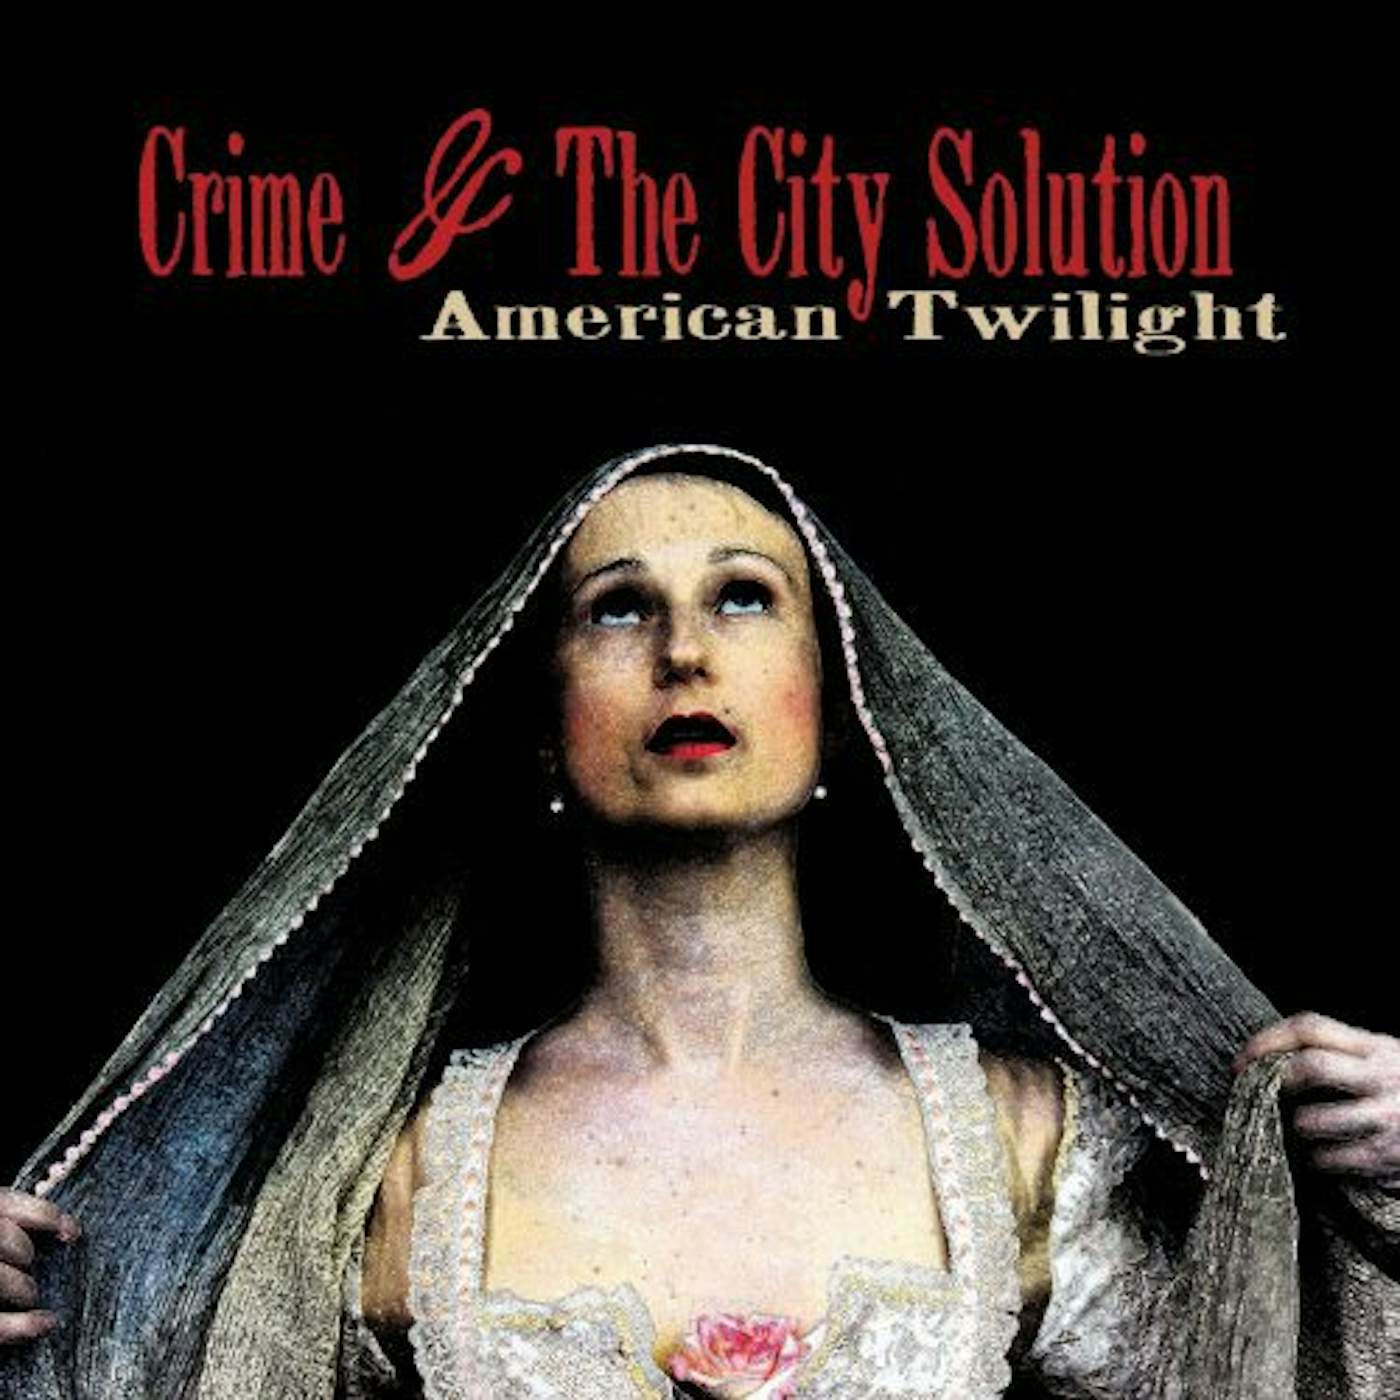 Crime & the City Solution American Twilight Vinyl Record